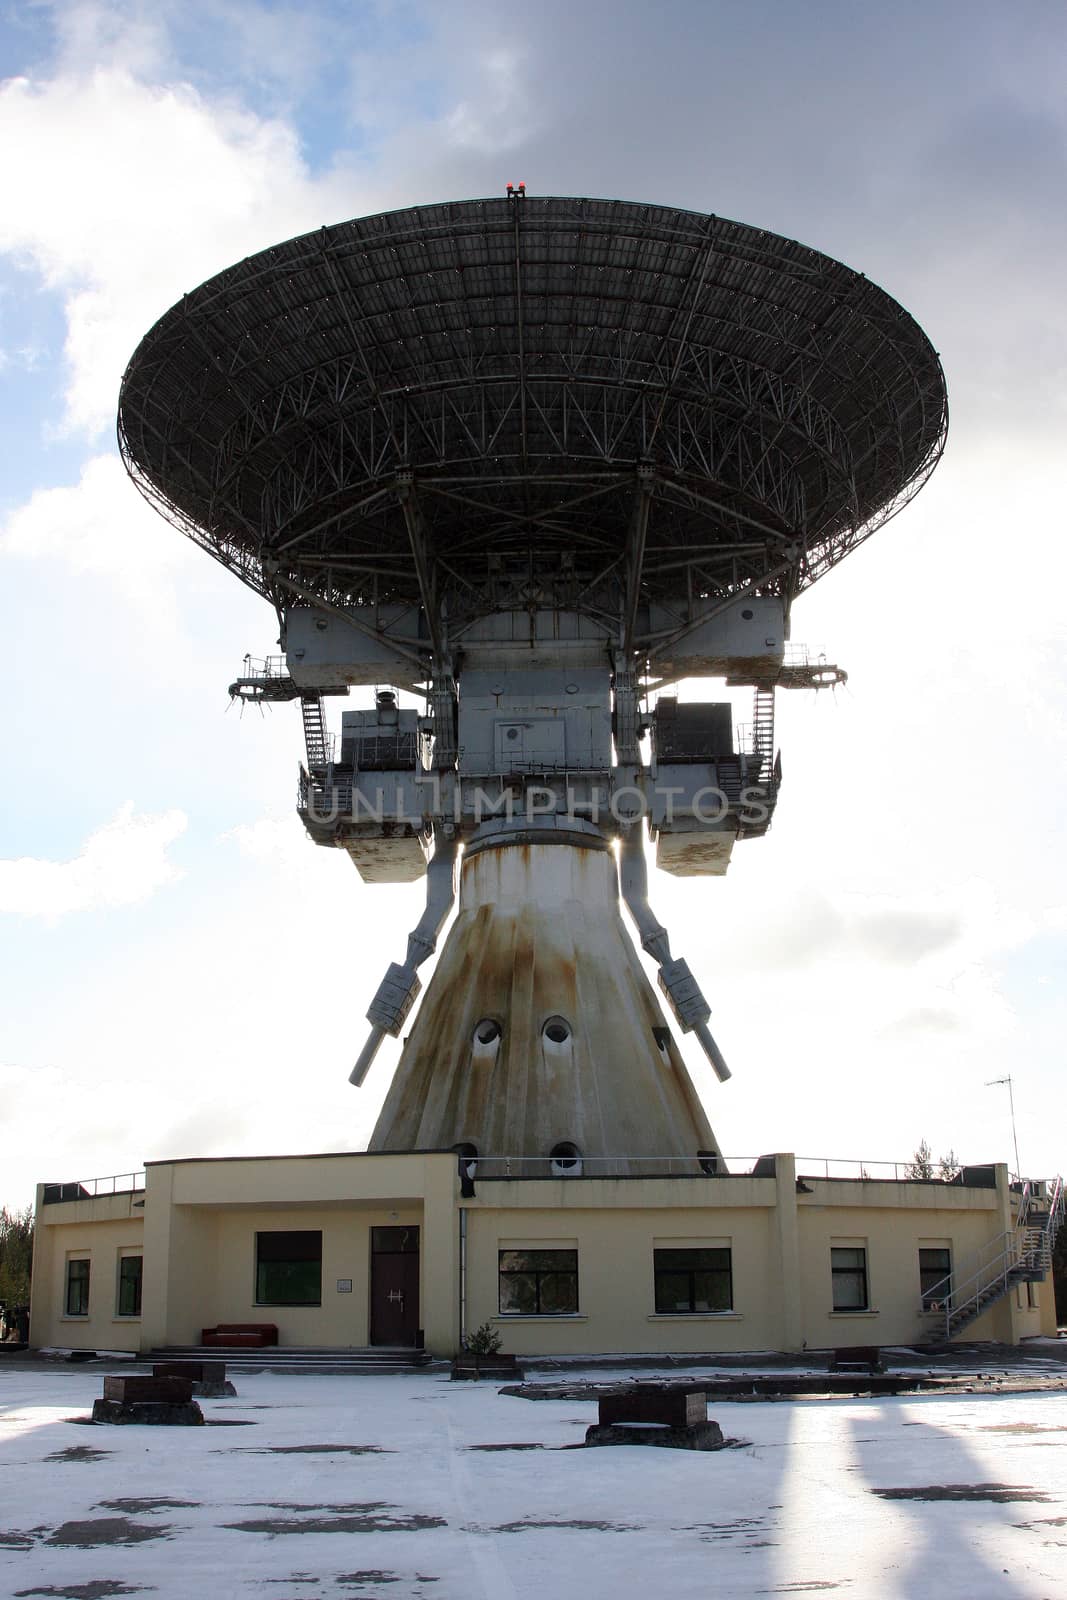  32 m radiotelescope RT-32  by Maris